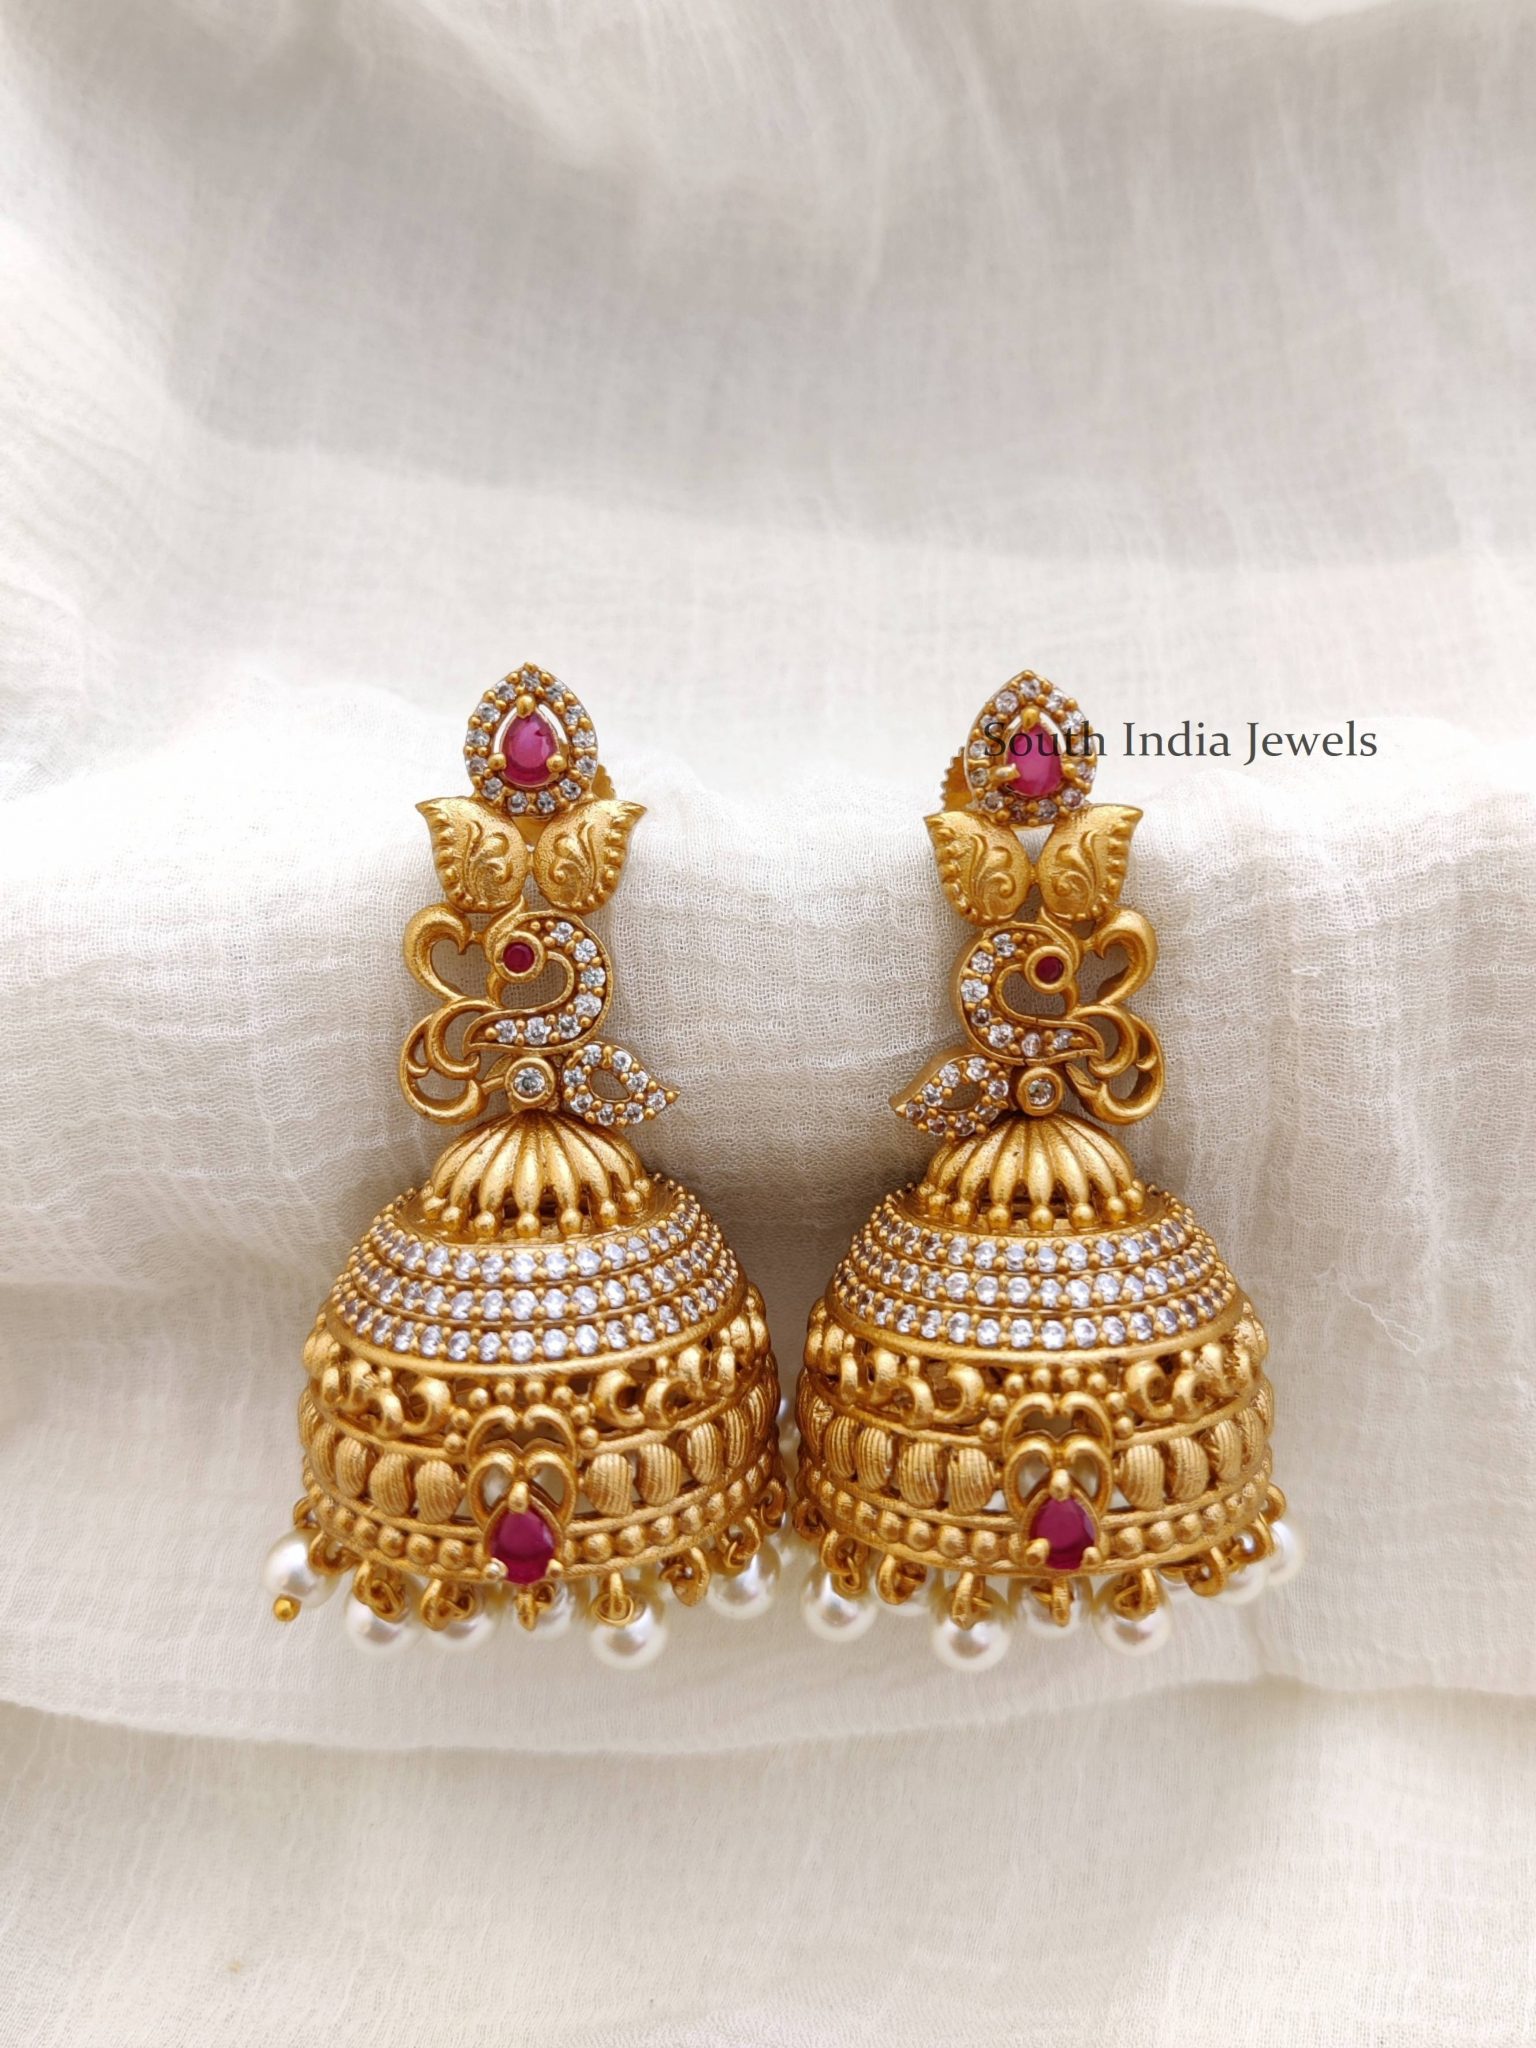 Pretty Peacock Design Jhumkas - South India Jewels